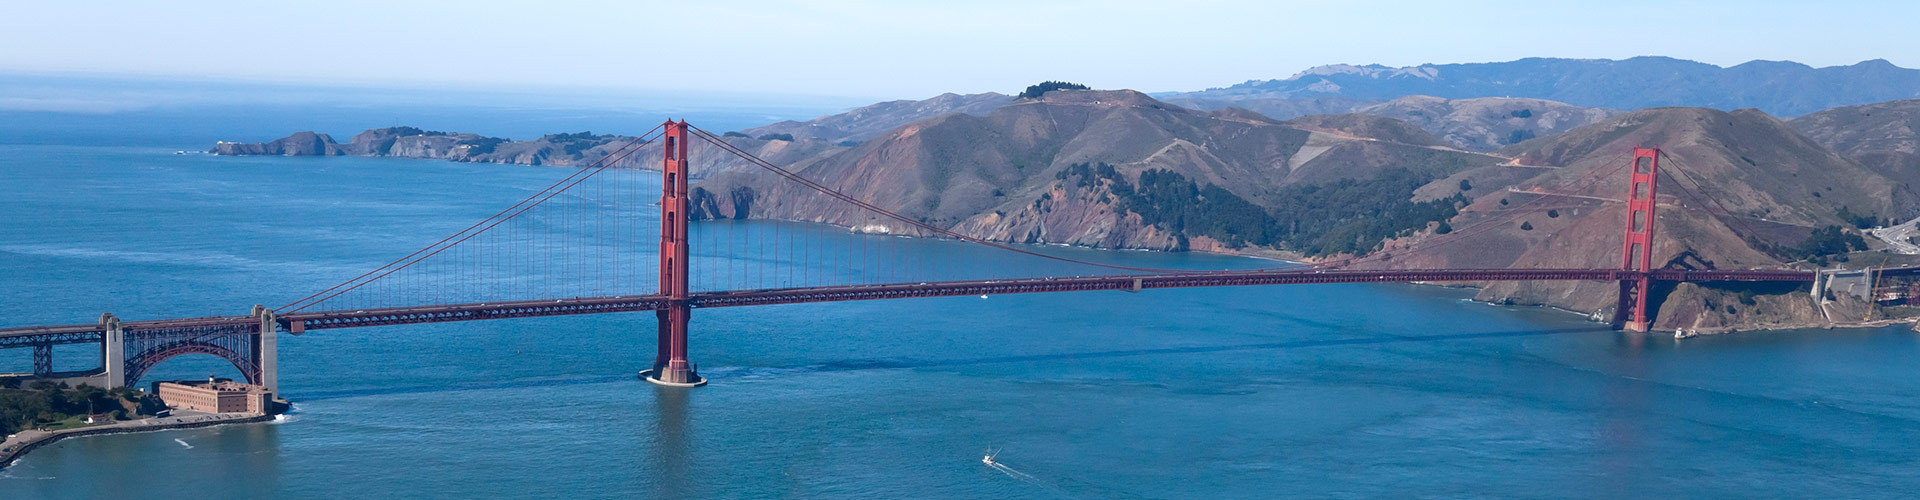 Golden Gate Bridge aerial view